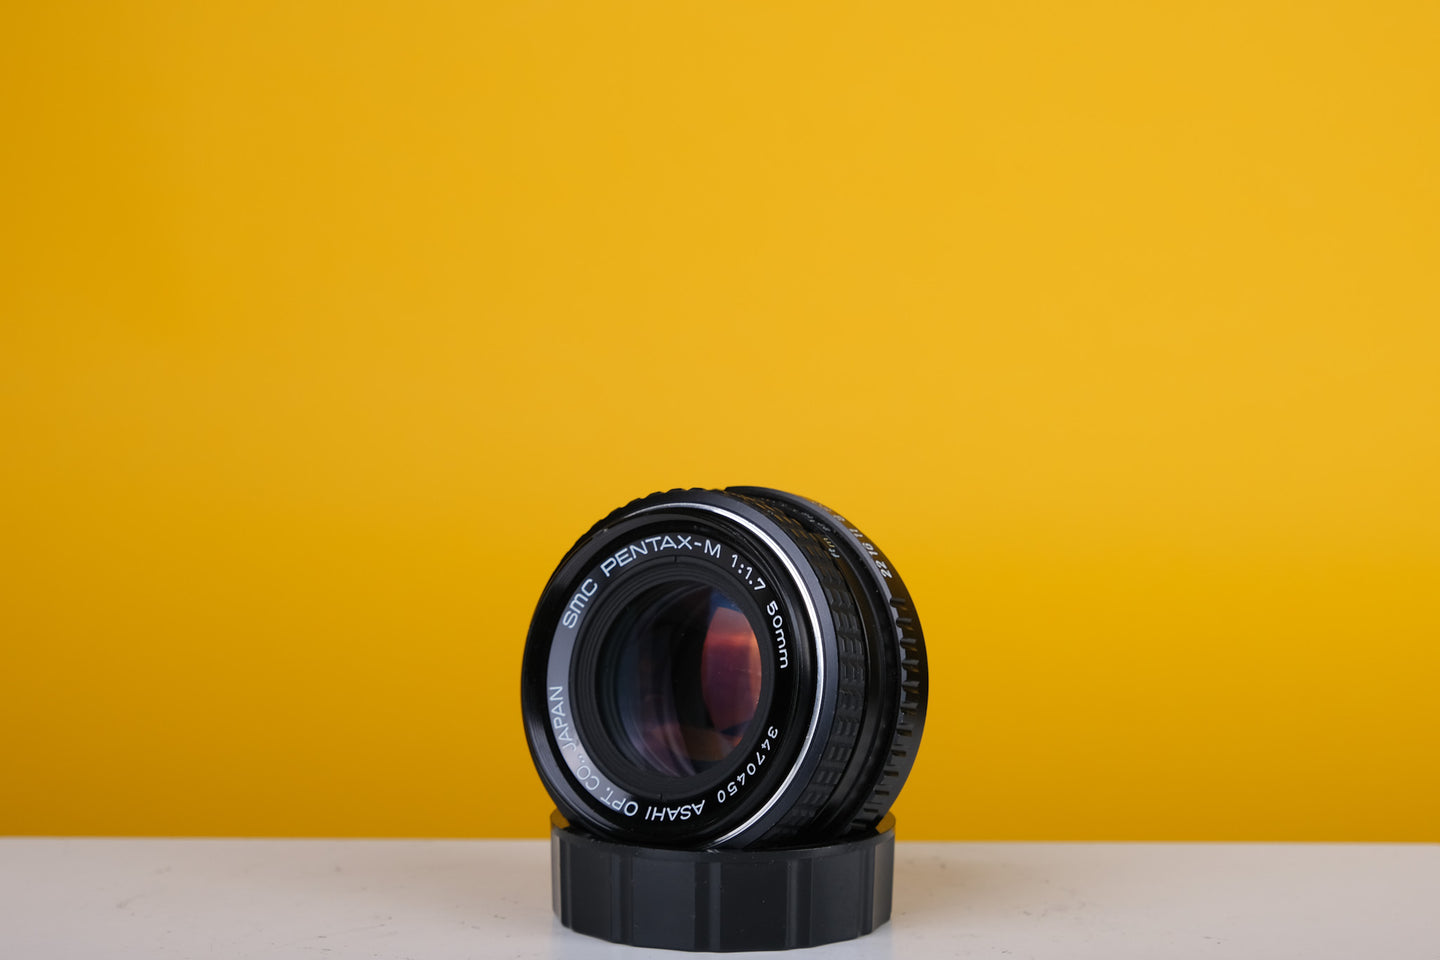 SMC Pentax-M 50mm f1.7 Lens